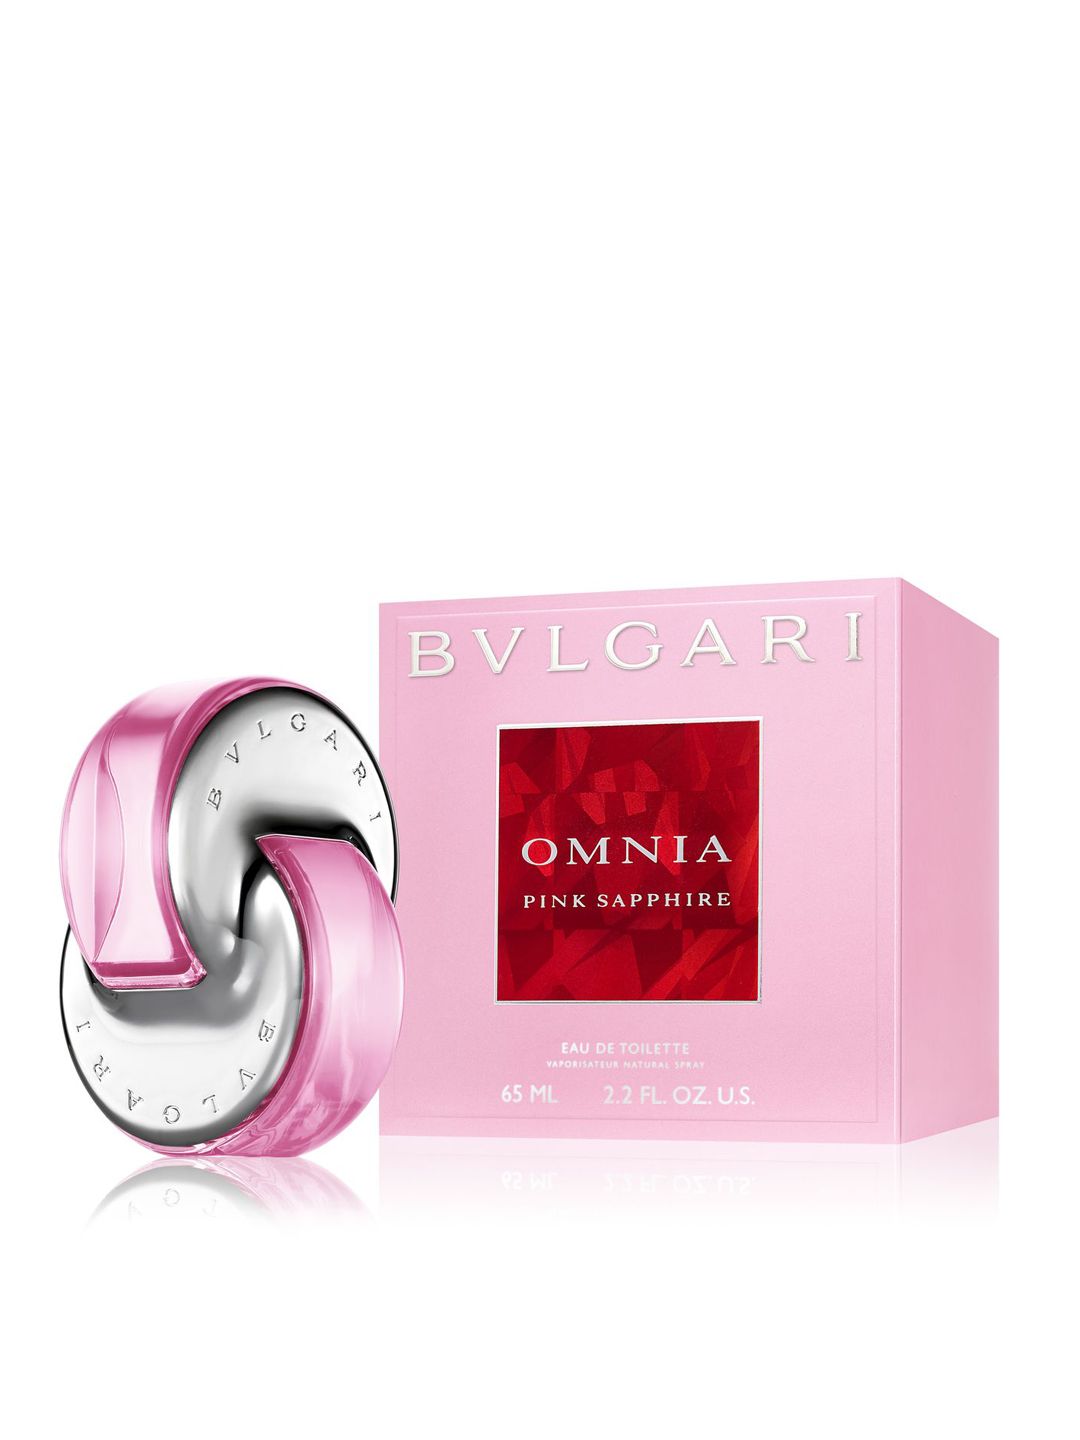 Bvlgari Omnia Pink Sapphire Eau de Toilette 65 ml Price in India